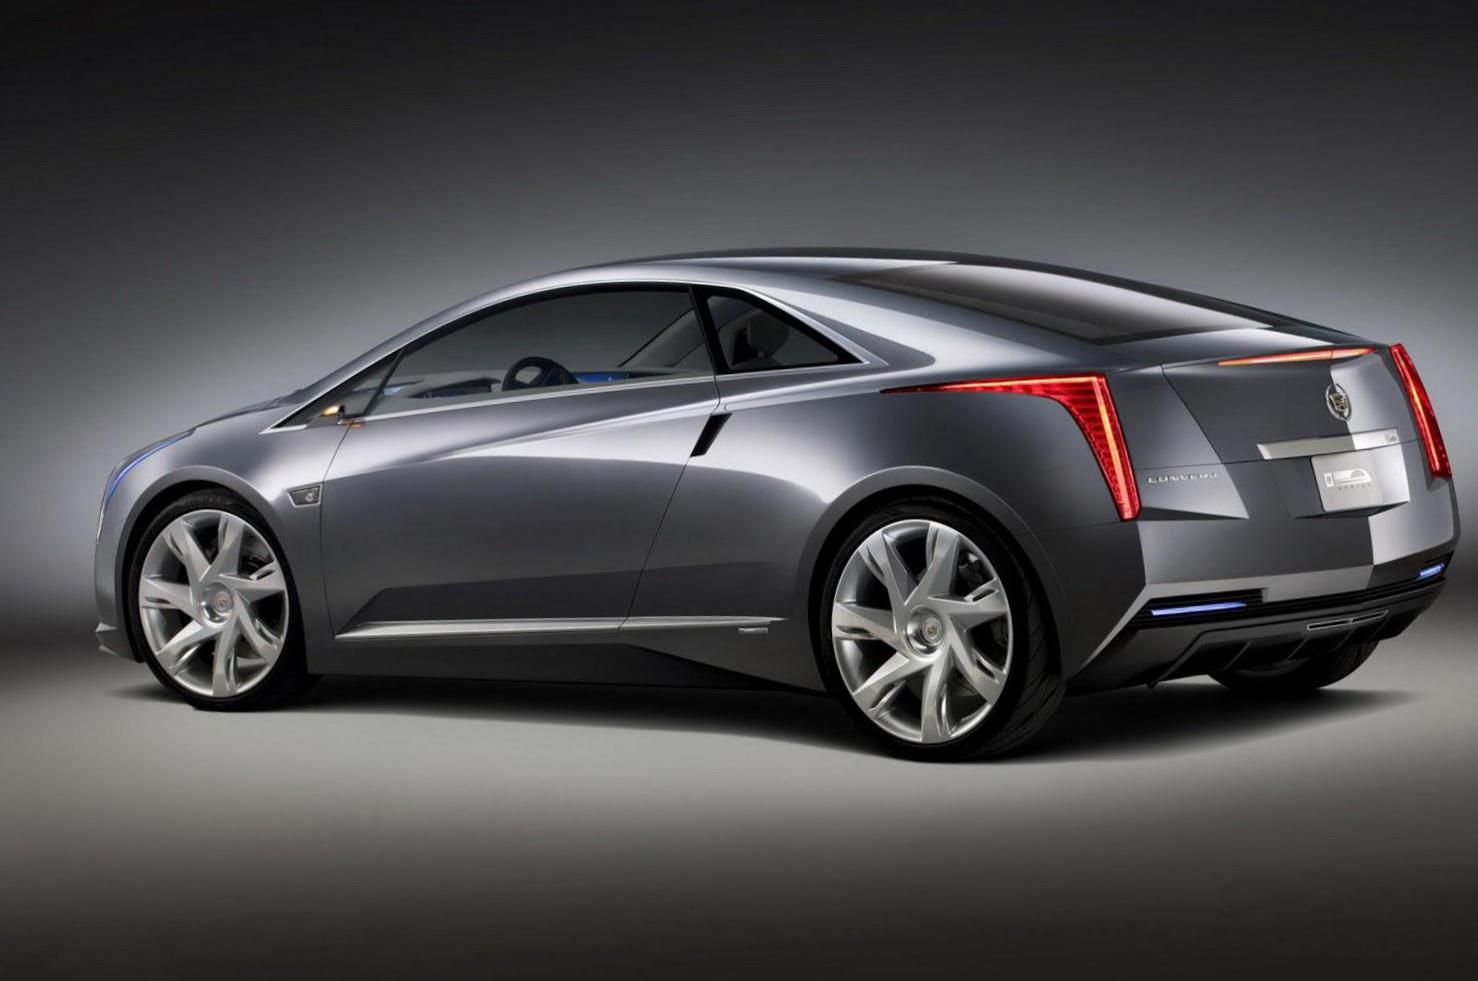 ELR Coupe Cadillac Characteristics 2013